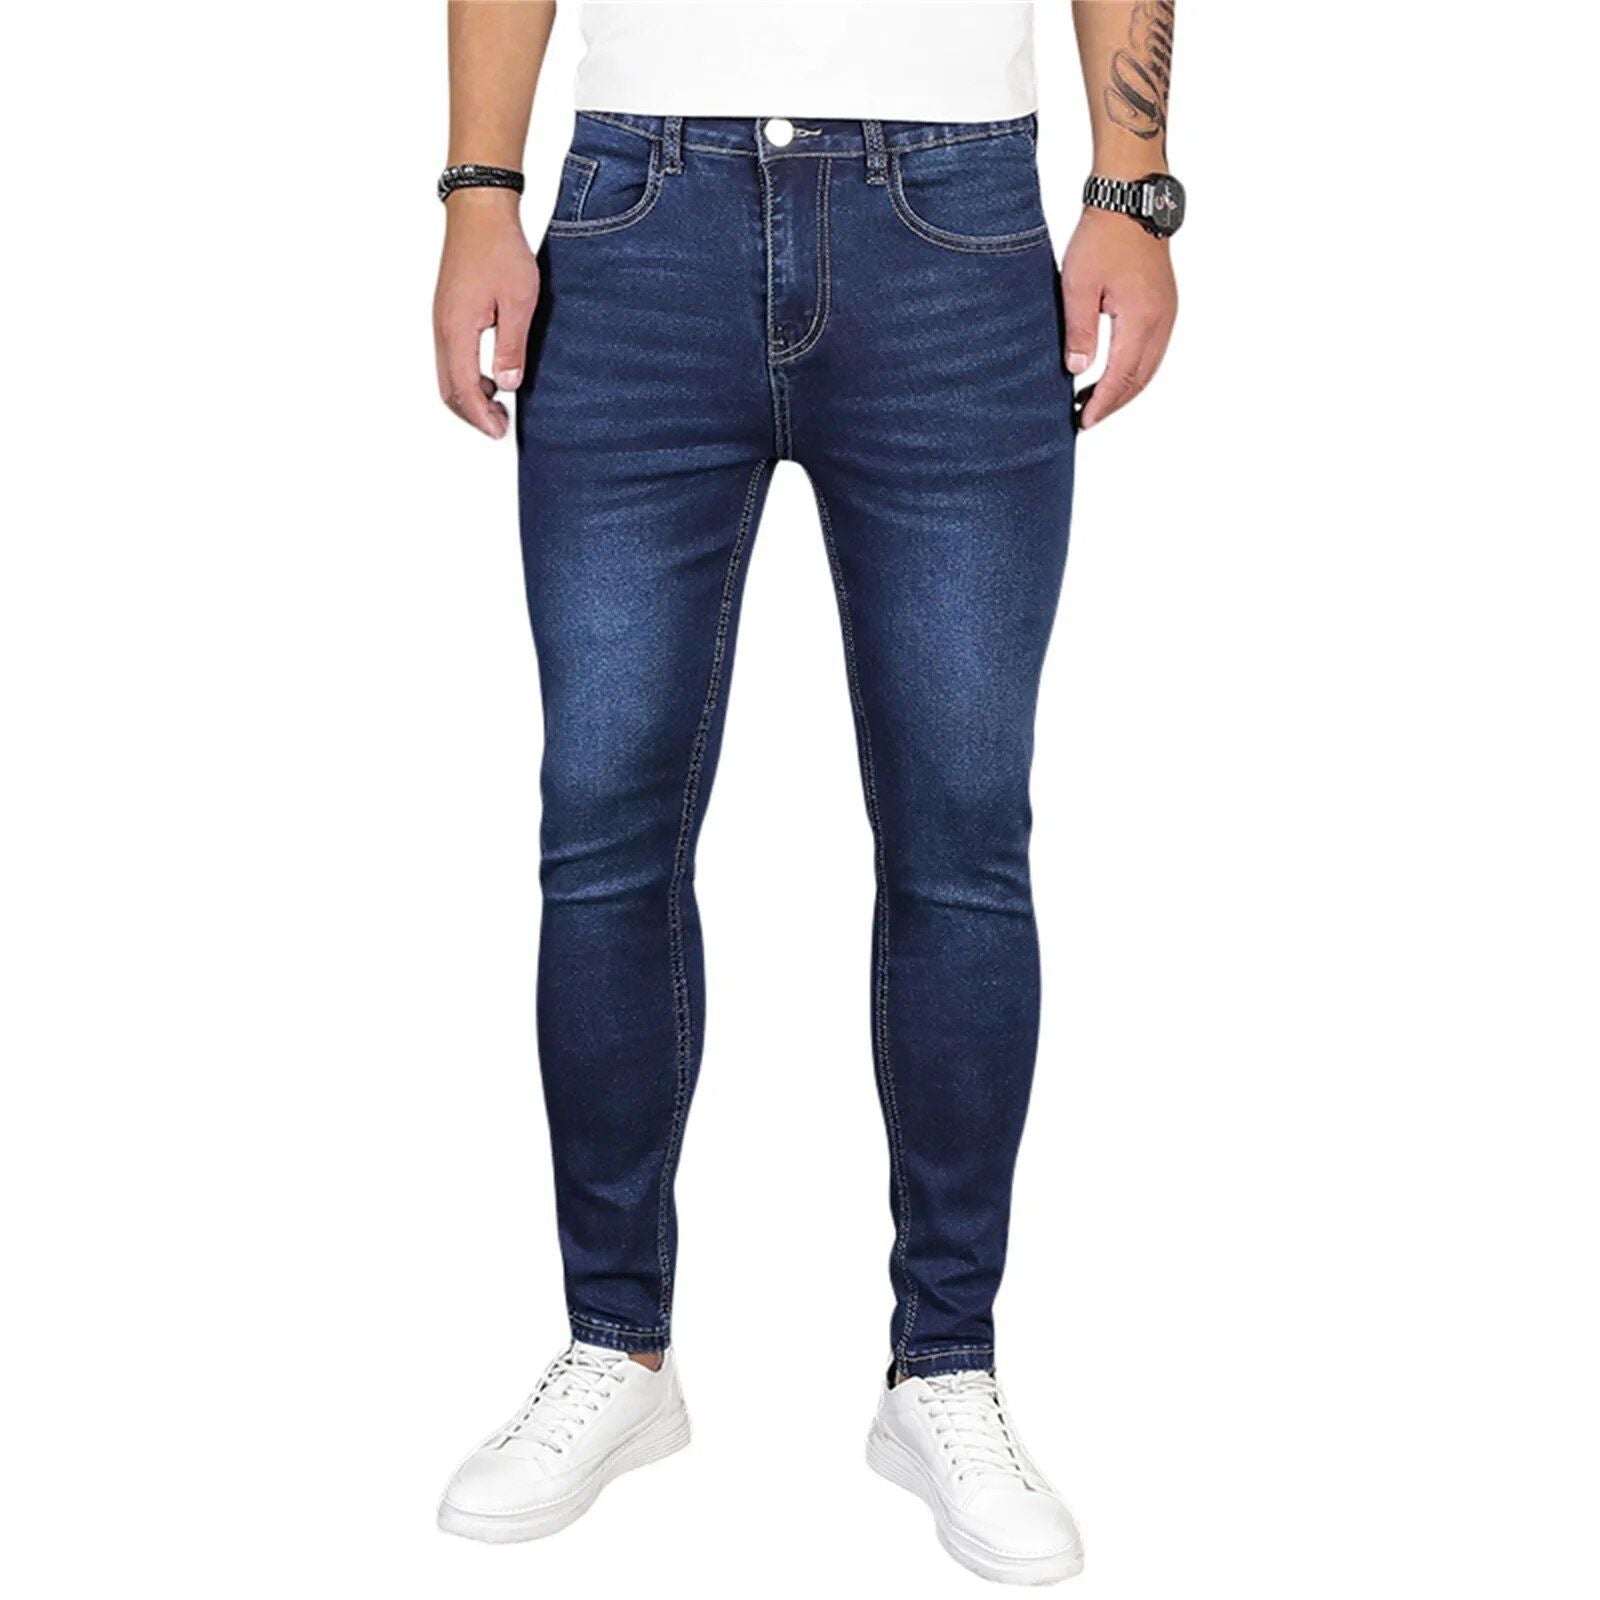 Men's Slim-Fit Stretch Denim Jeans on a white background